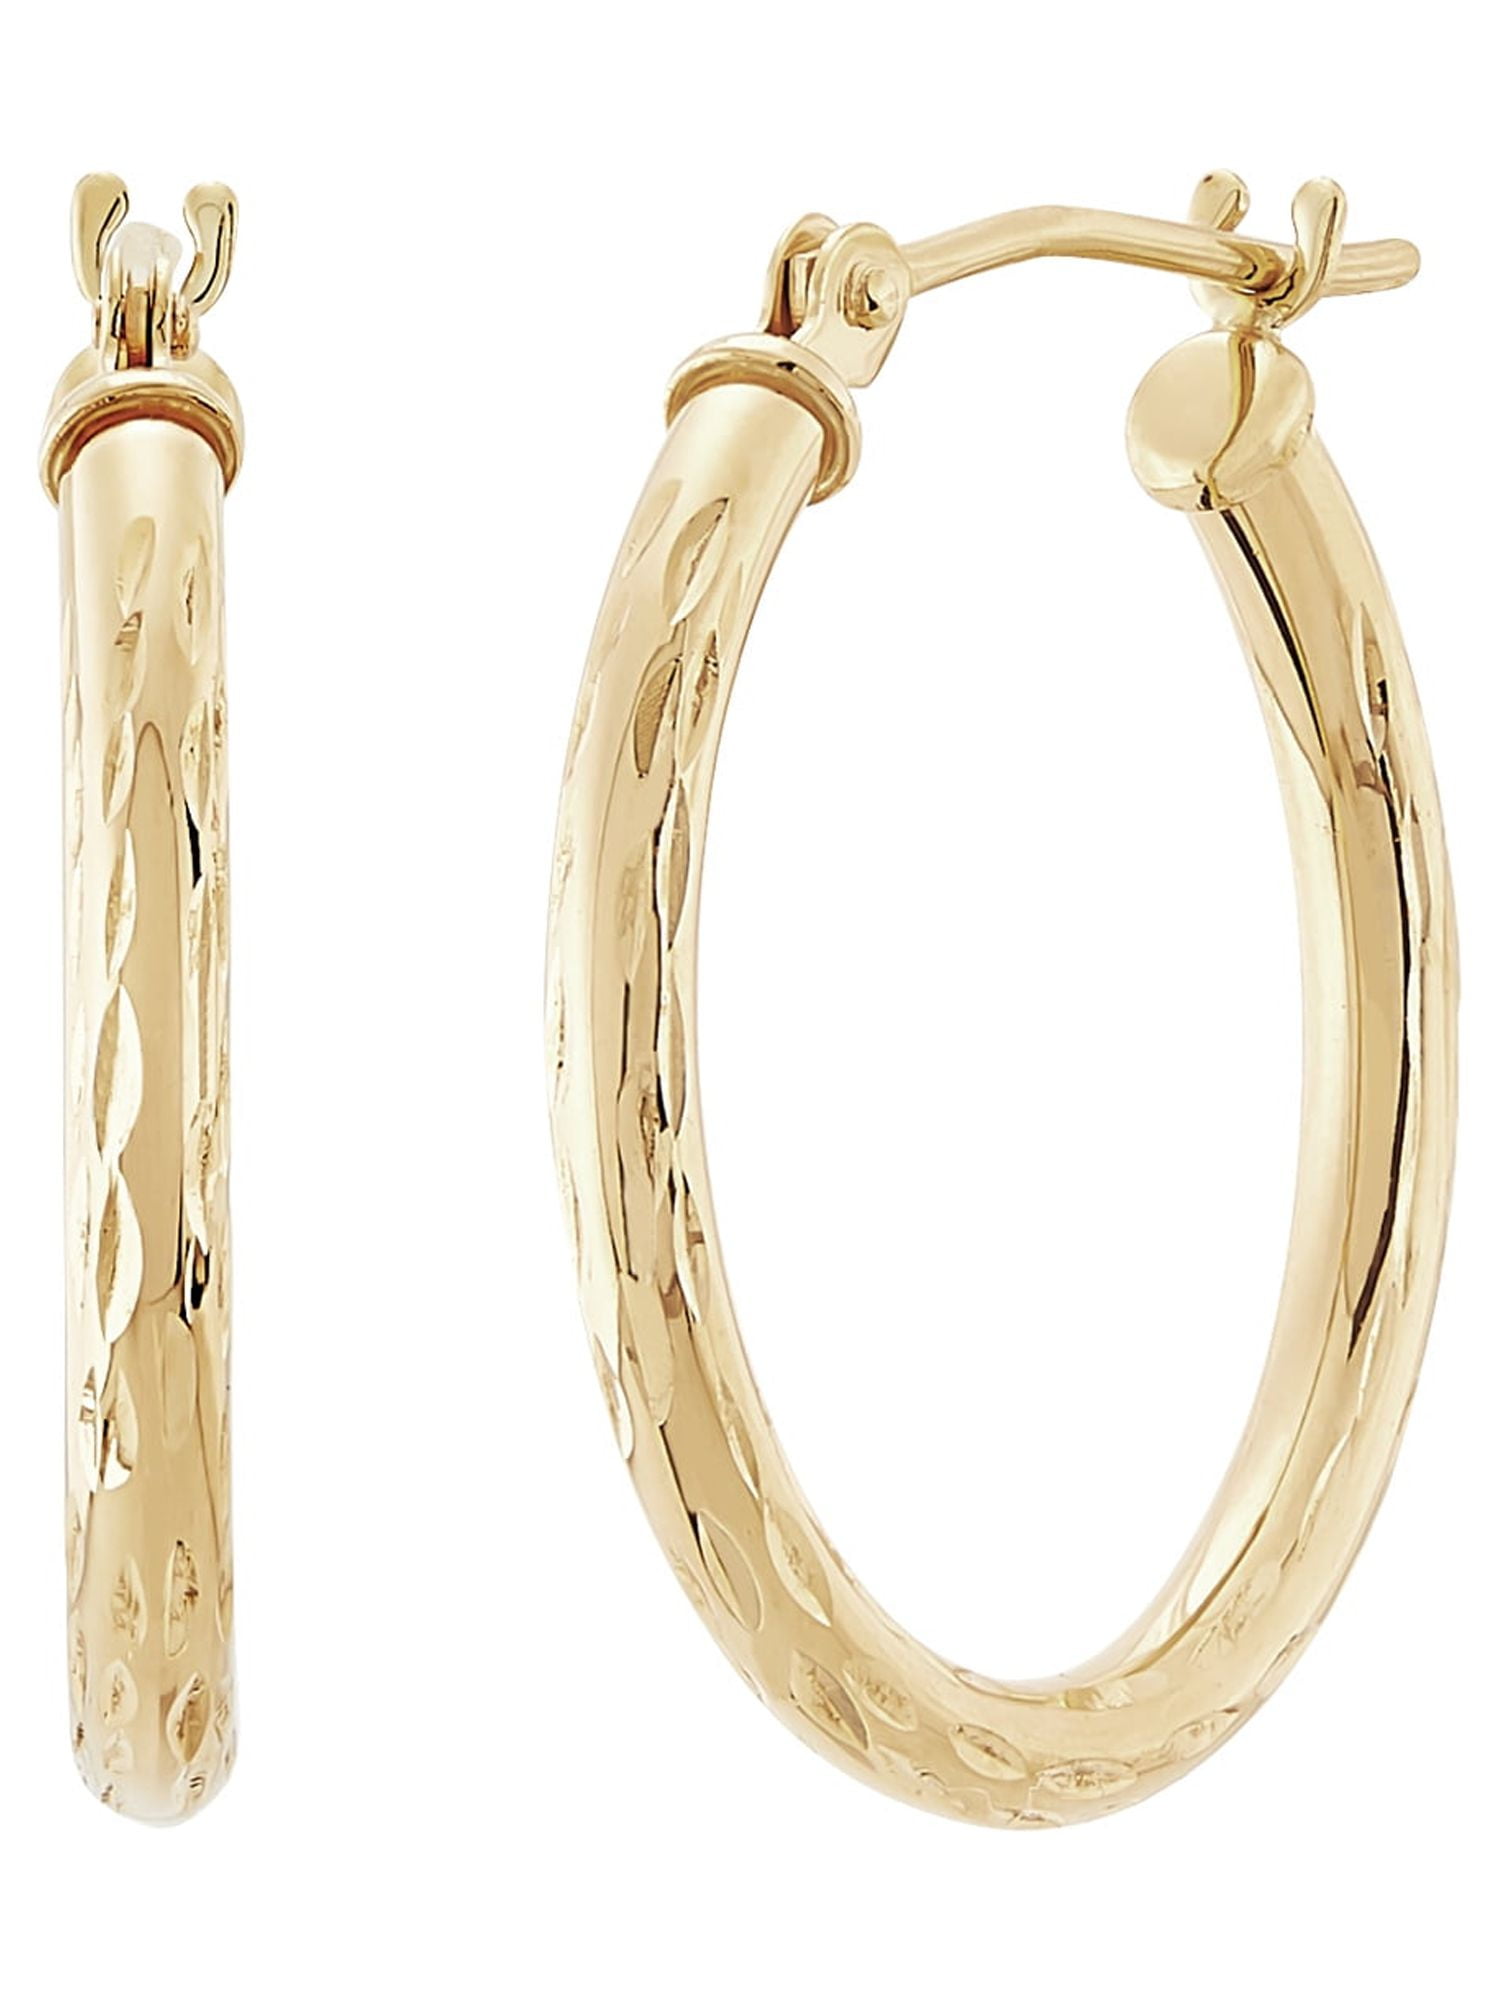 10K Yellow Gold 5 mm Hoop Earrings Diamond Cut 2.2 inches/ 55 mm Snap Closure 7.6 Grams